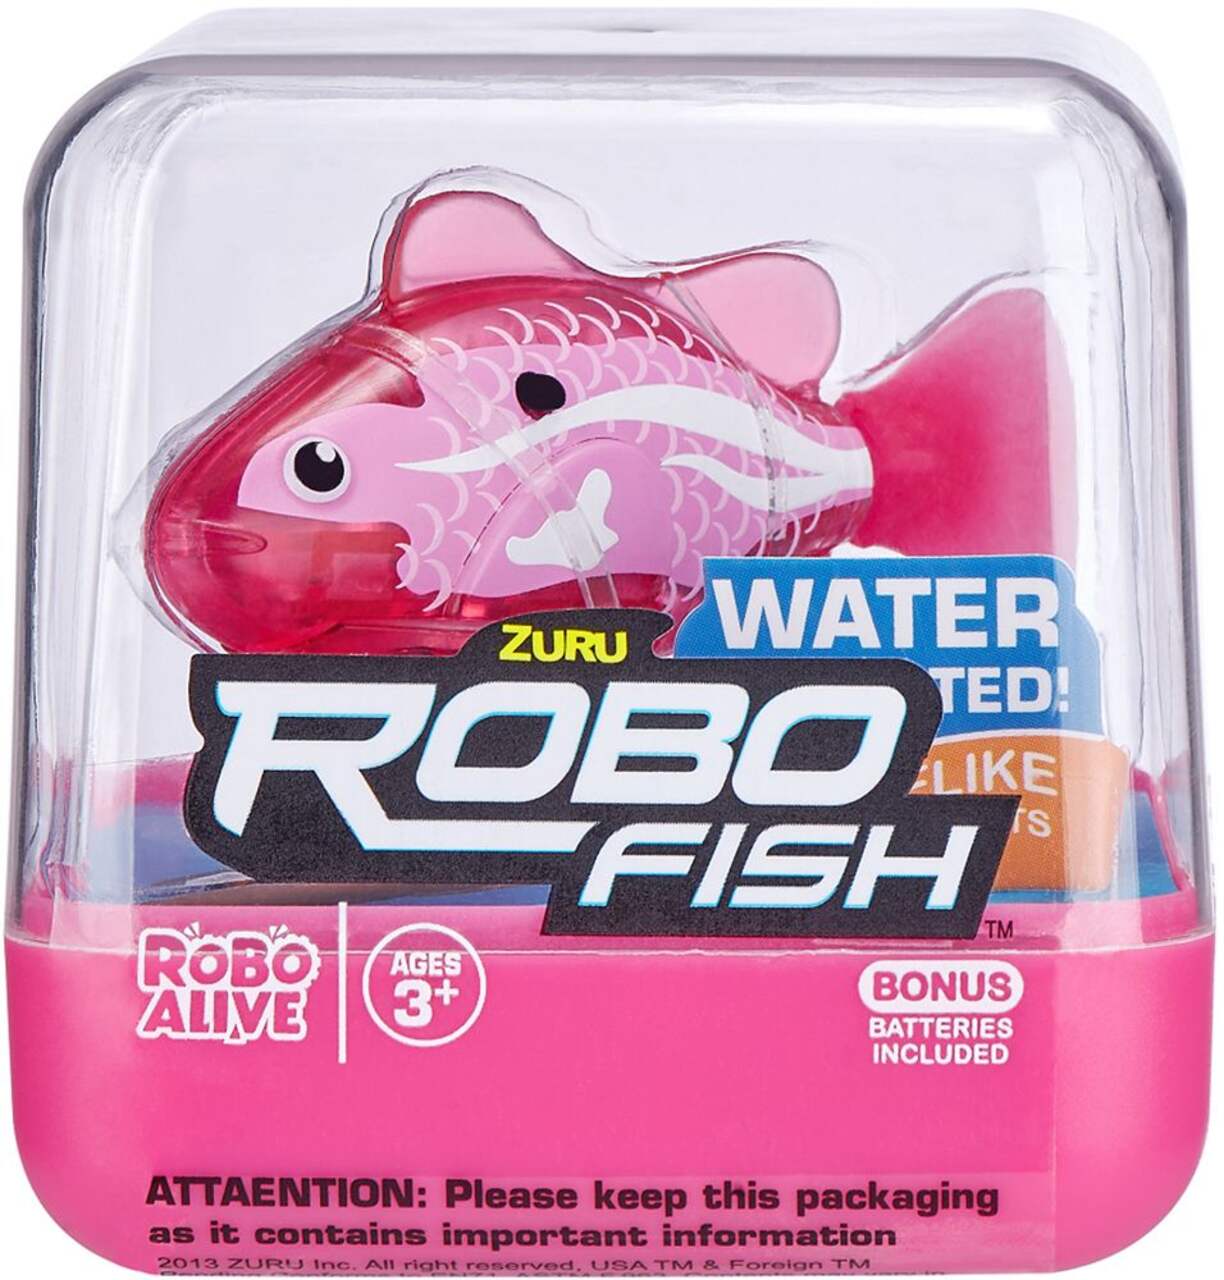 ZURU Robo Alive Robotic Fish Toy For Kids, Assorted, Ages 3+